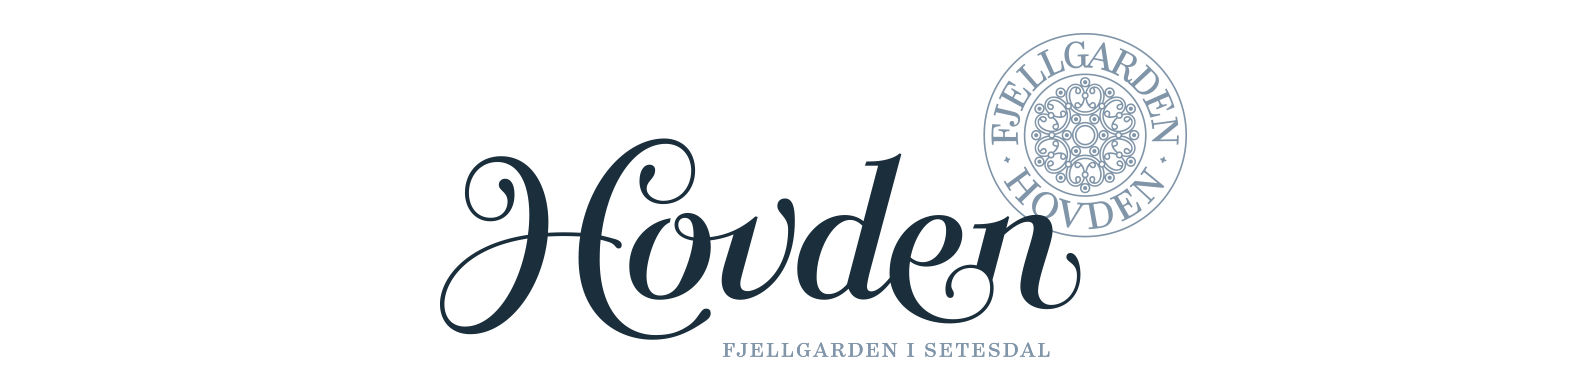 Fjellgarden Hovden logo. Visuell identitet Visual identity.